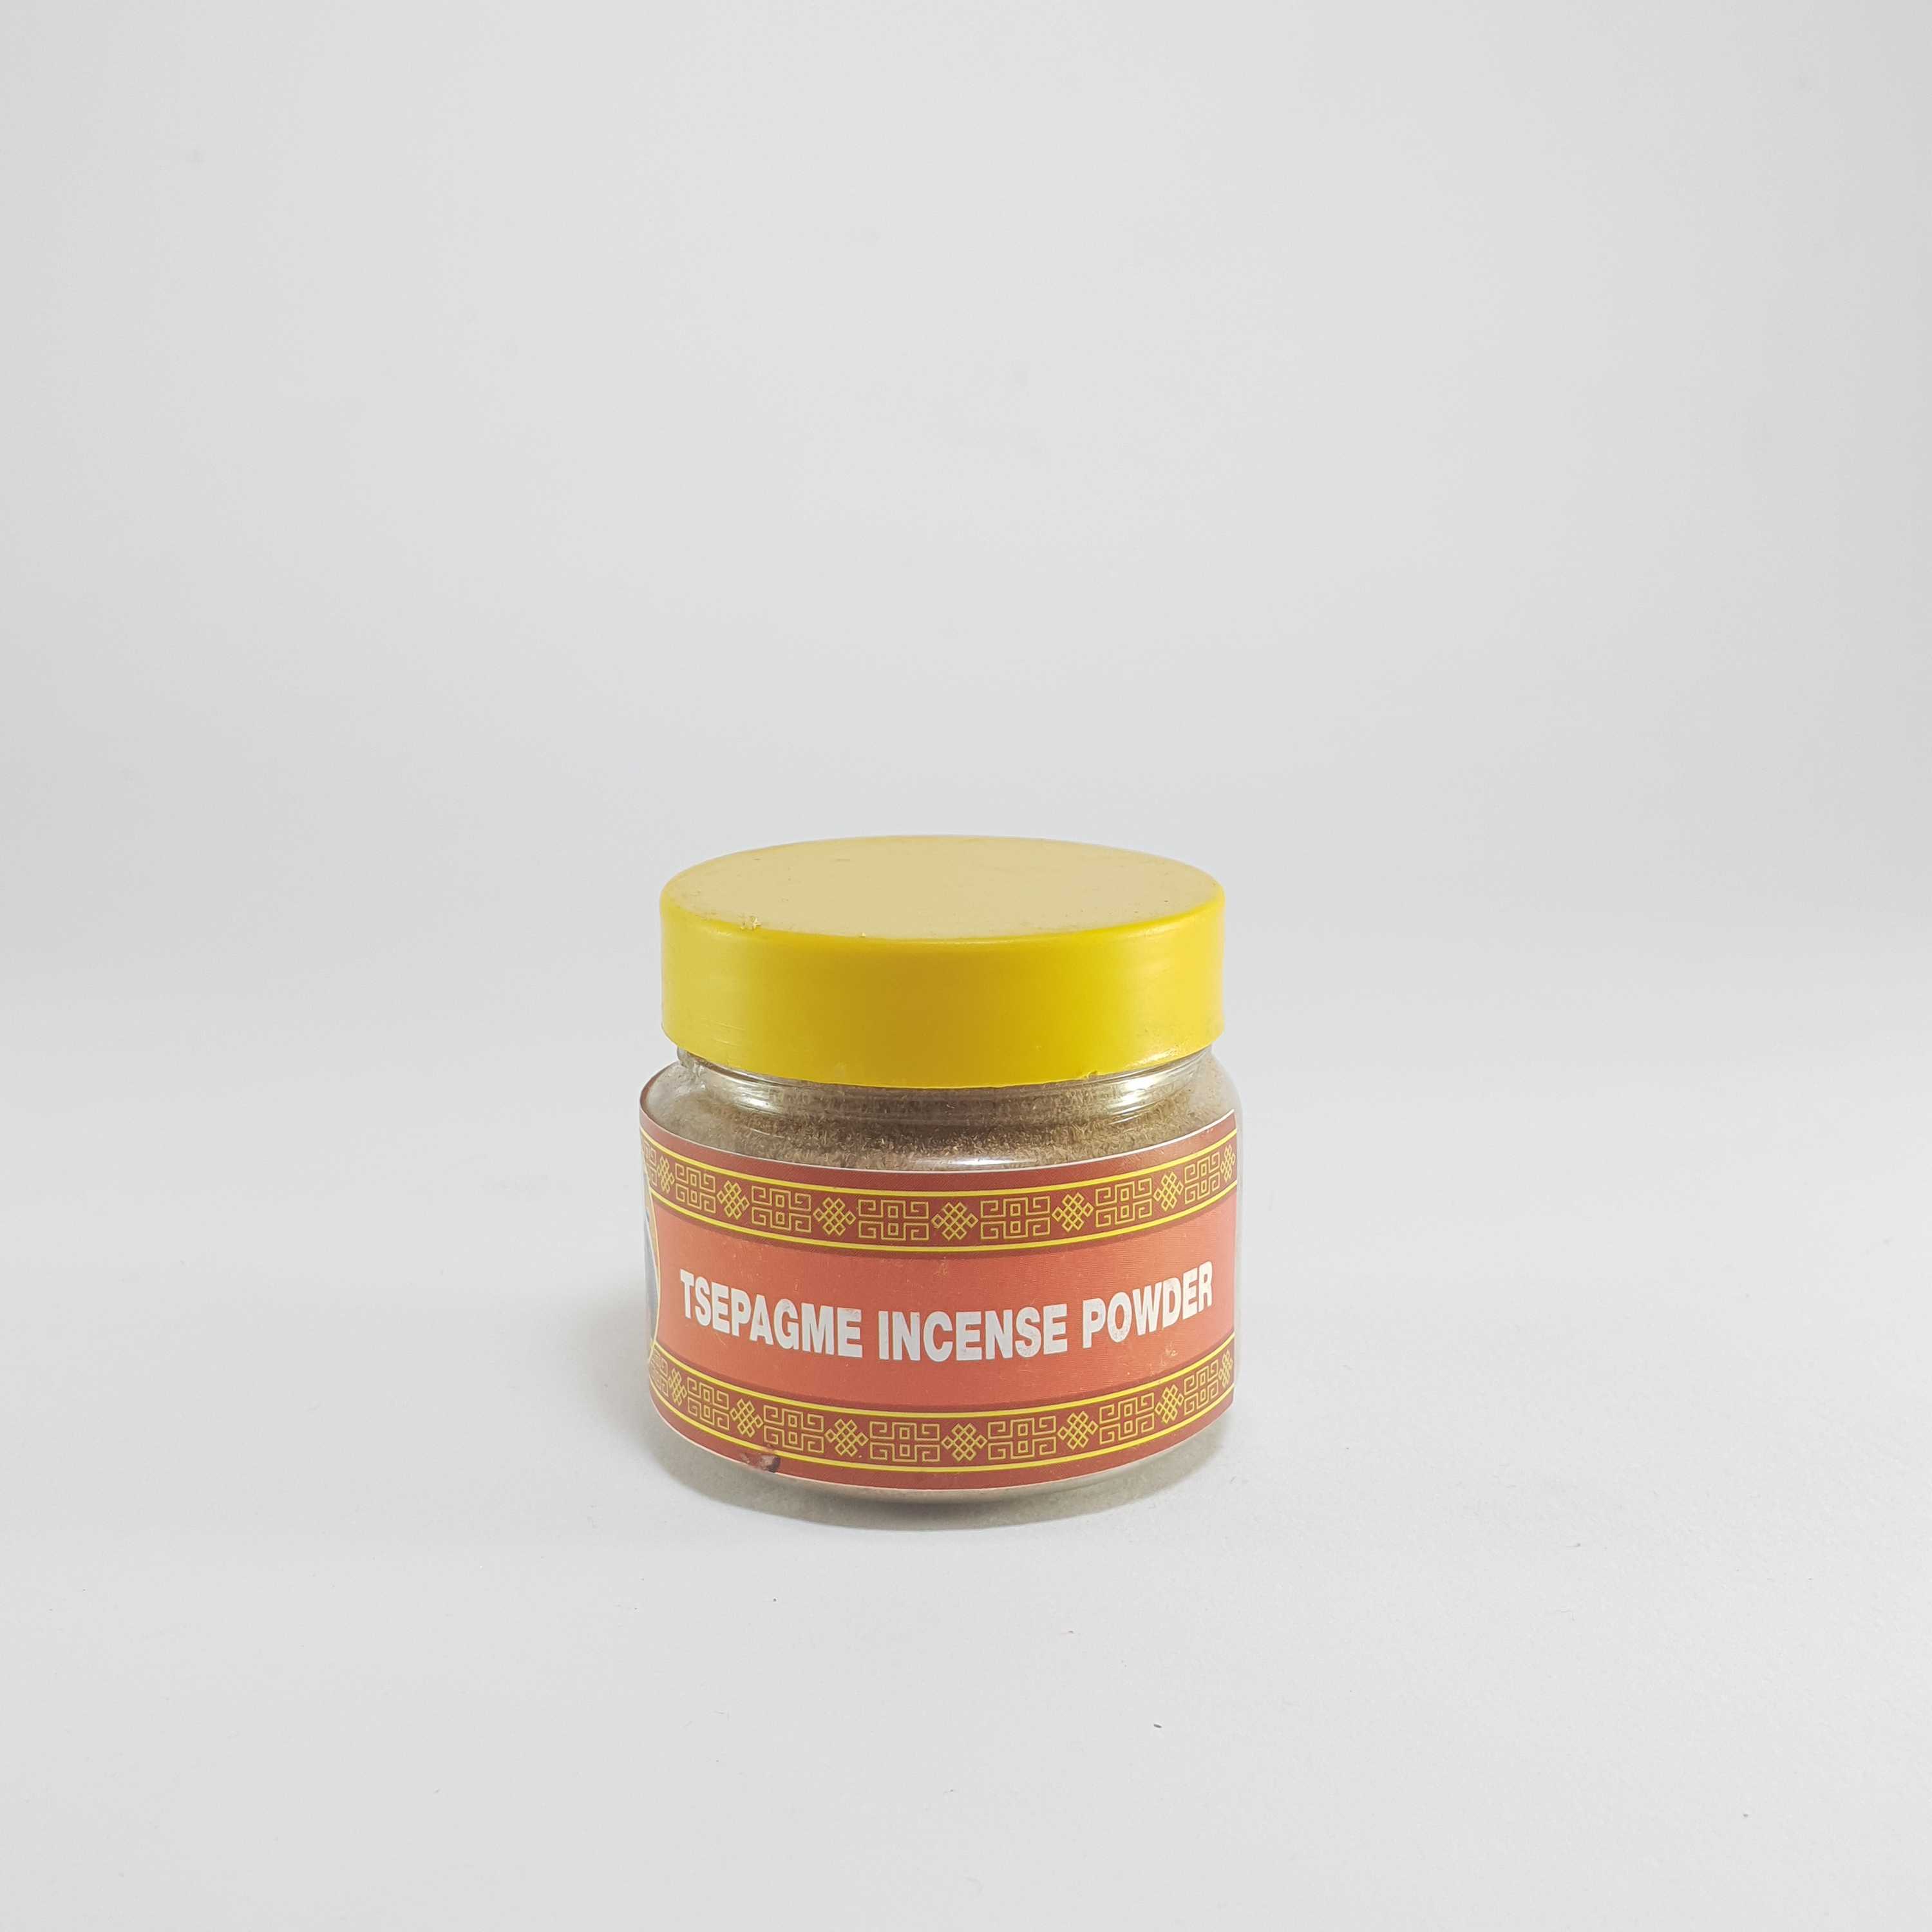 Tespagme Incense Powder, in Pet Jar